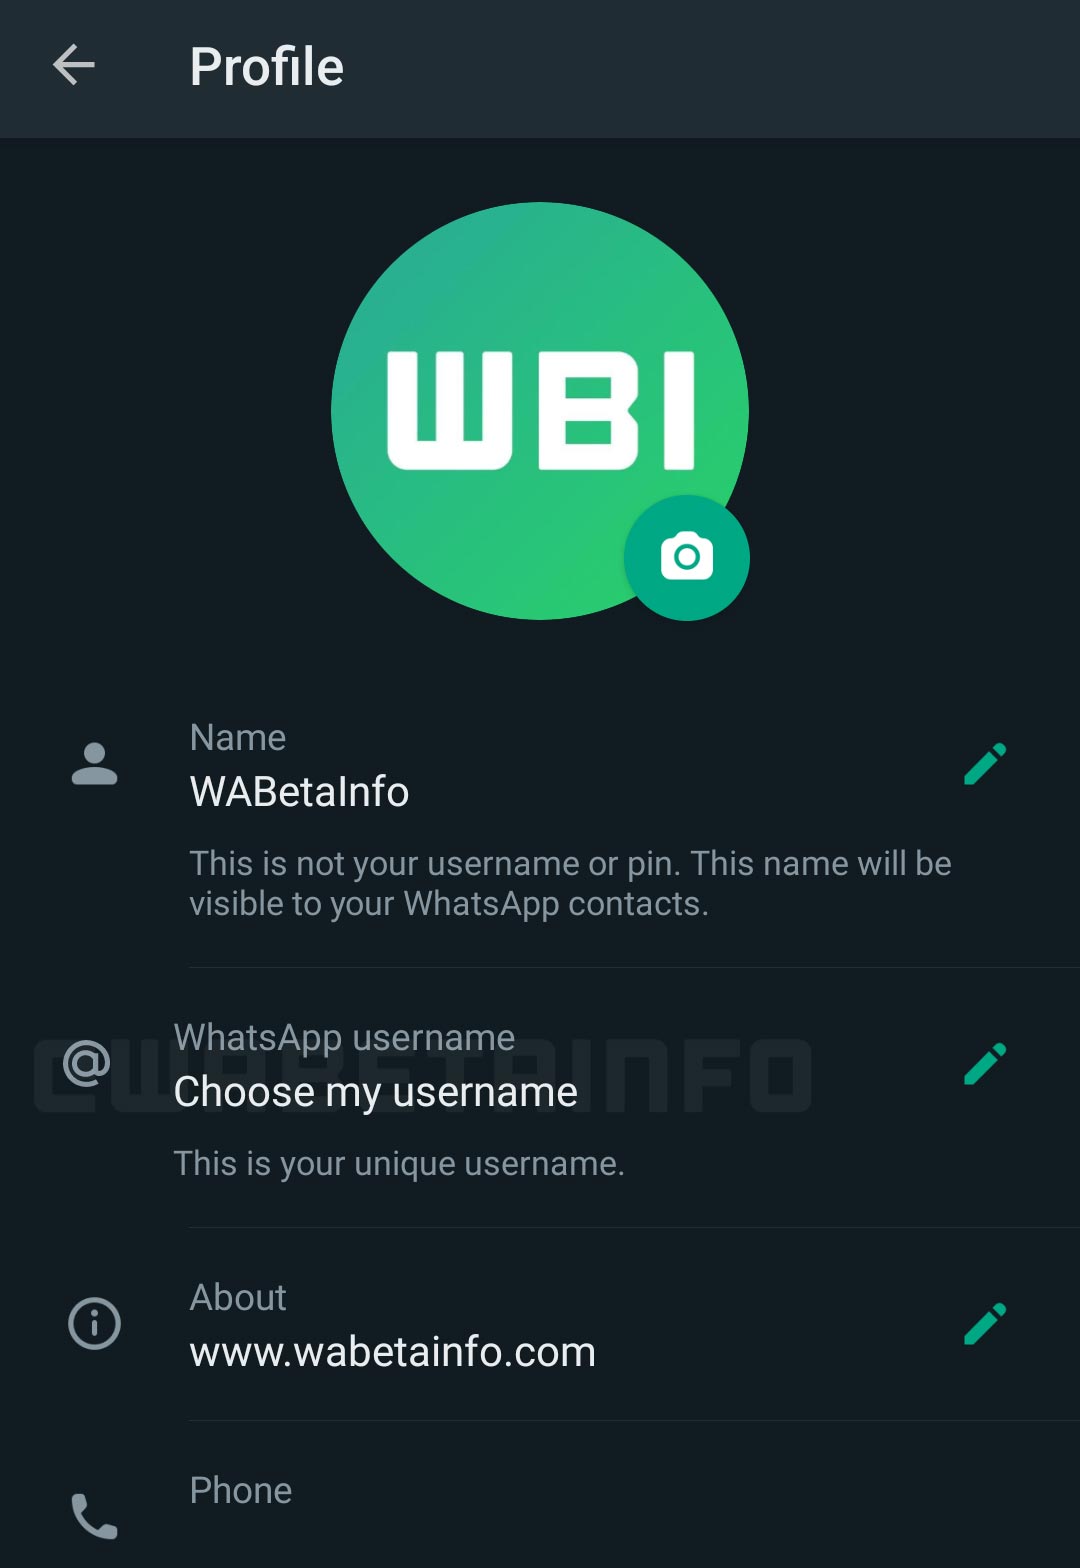 WhatsApp memperkenalkan fitur baru, pintasan